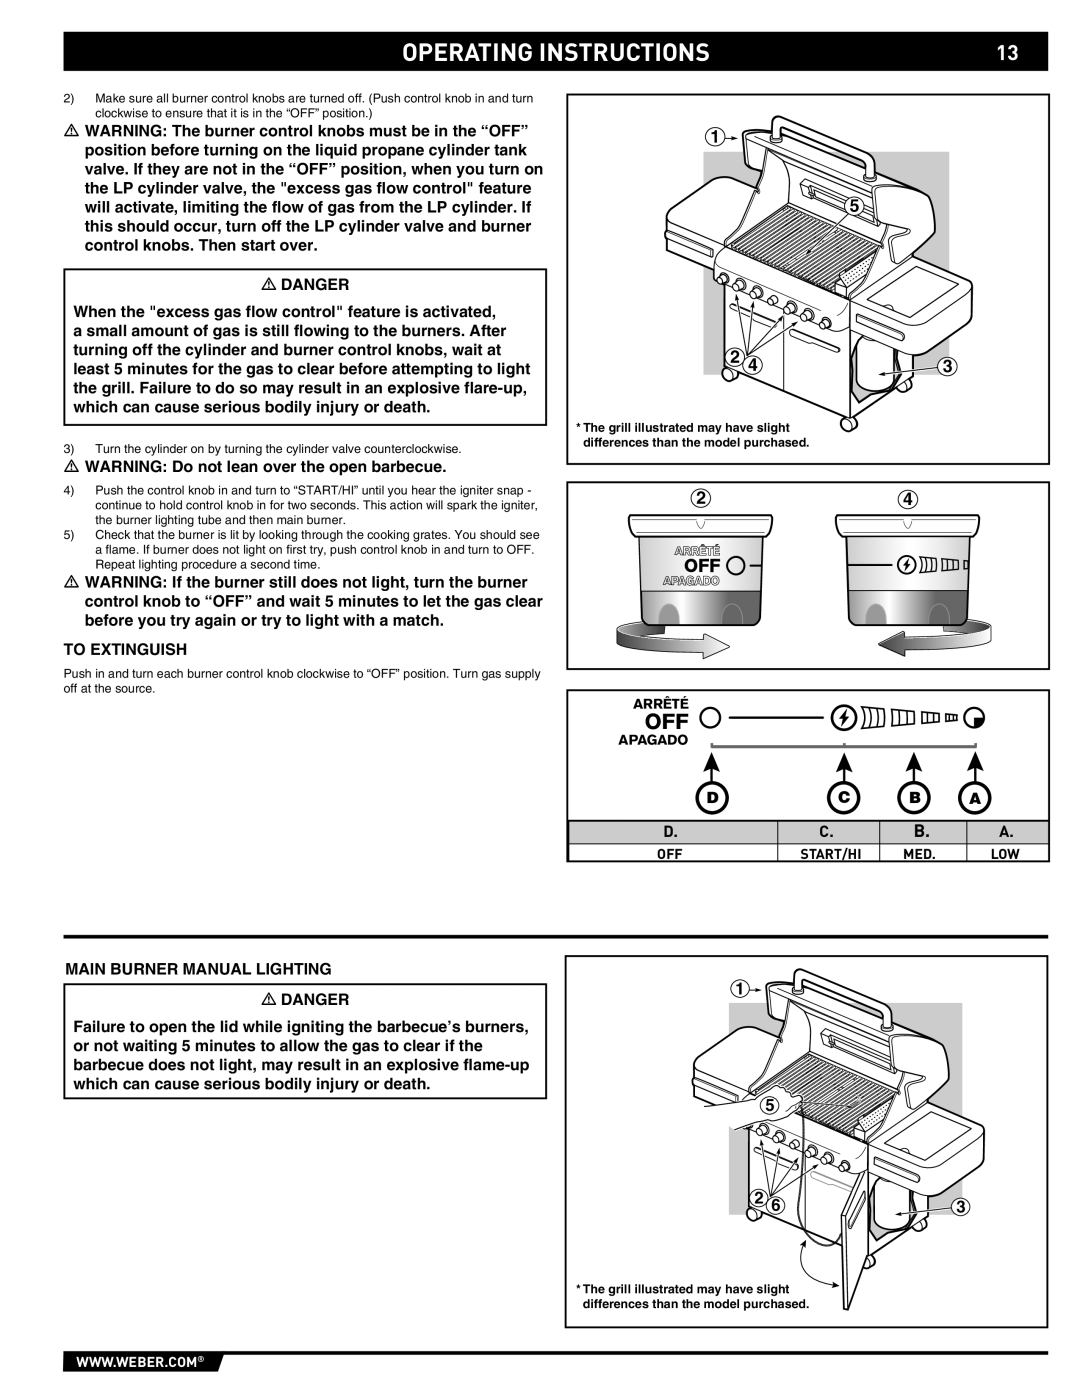 Summit 89190 manual Operating Instructions, D C B A 